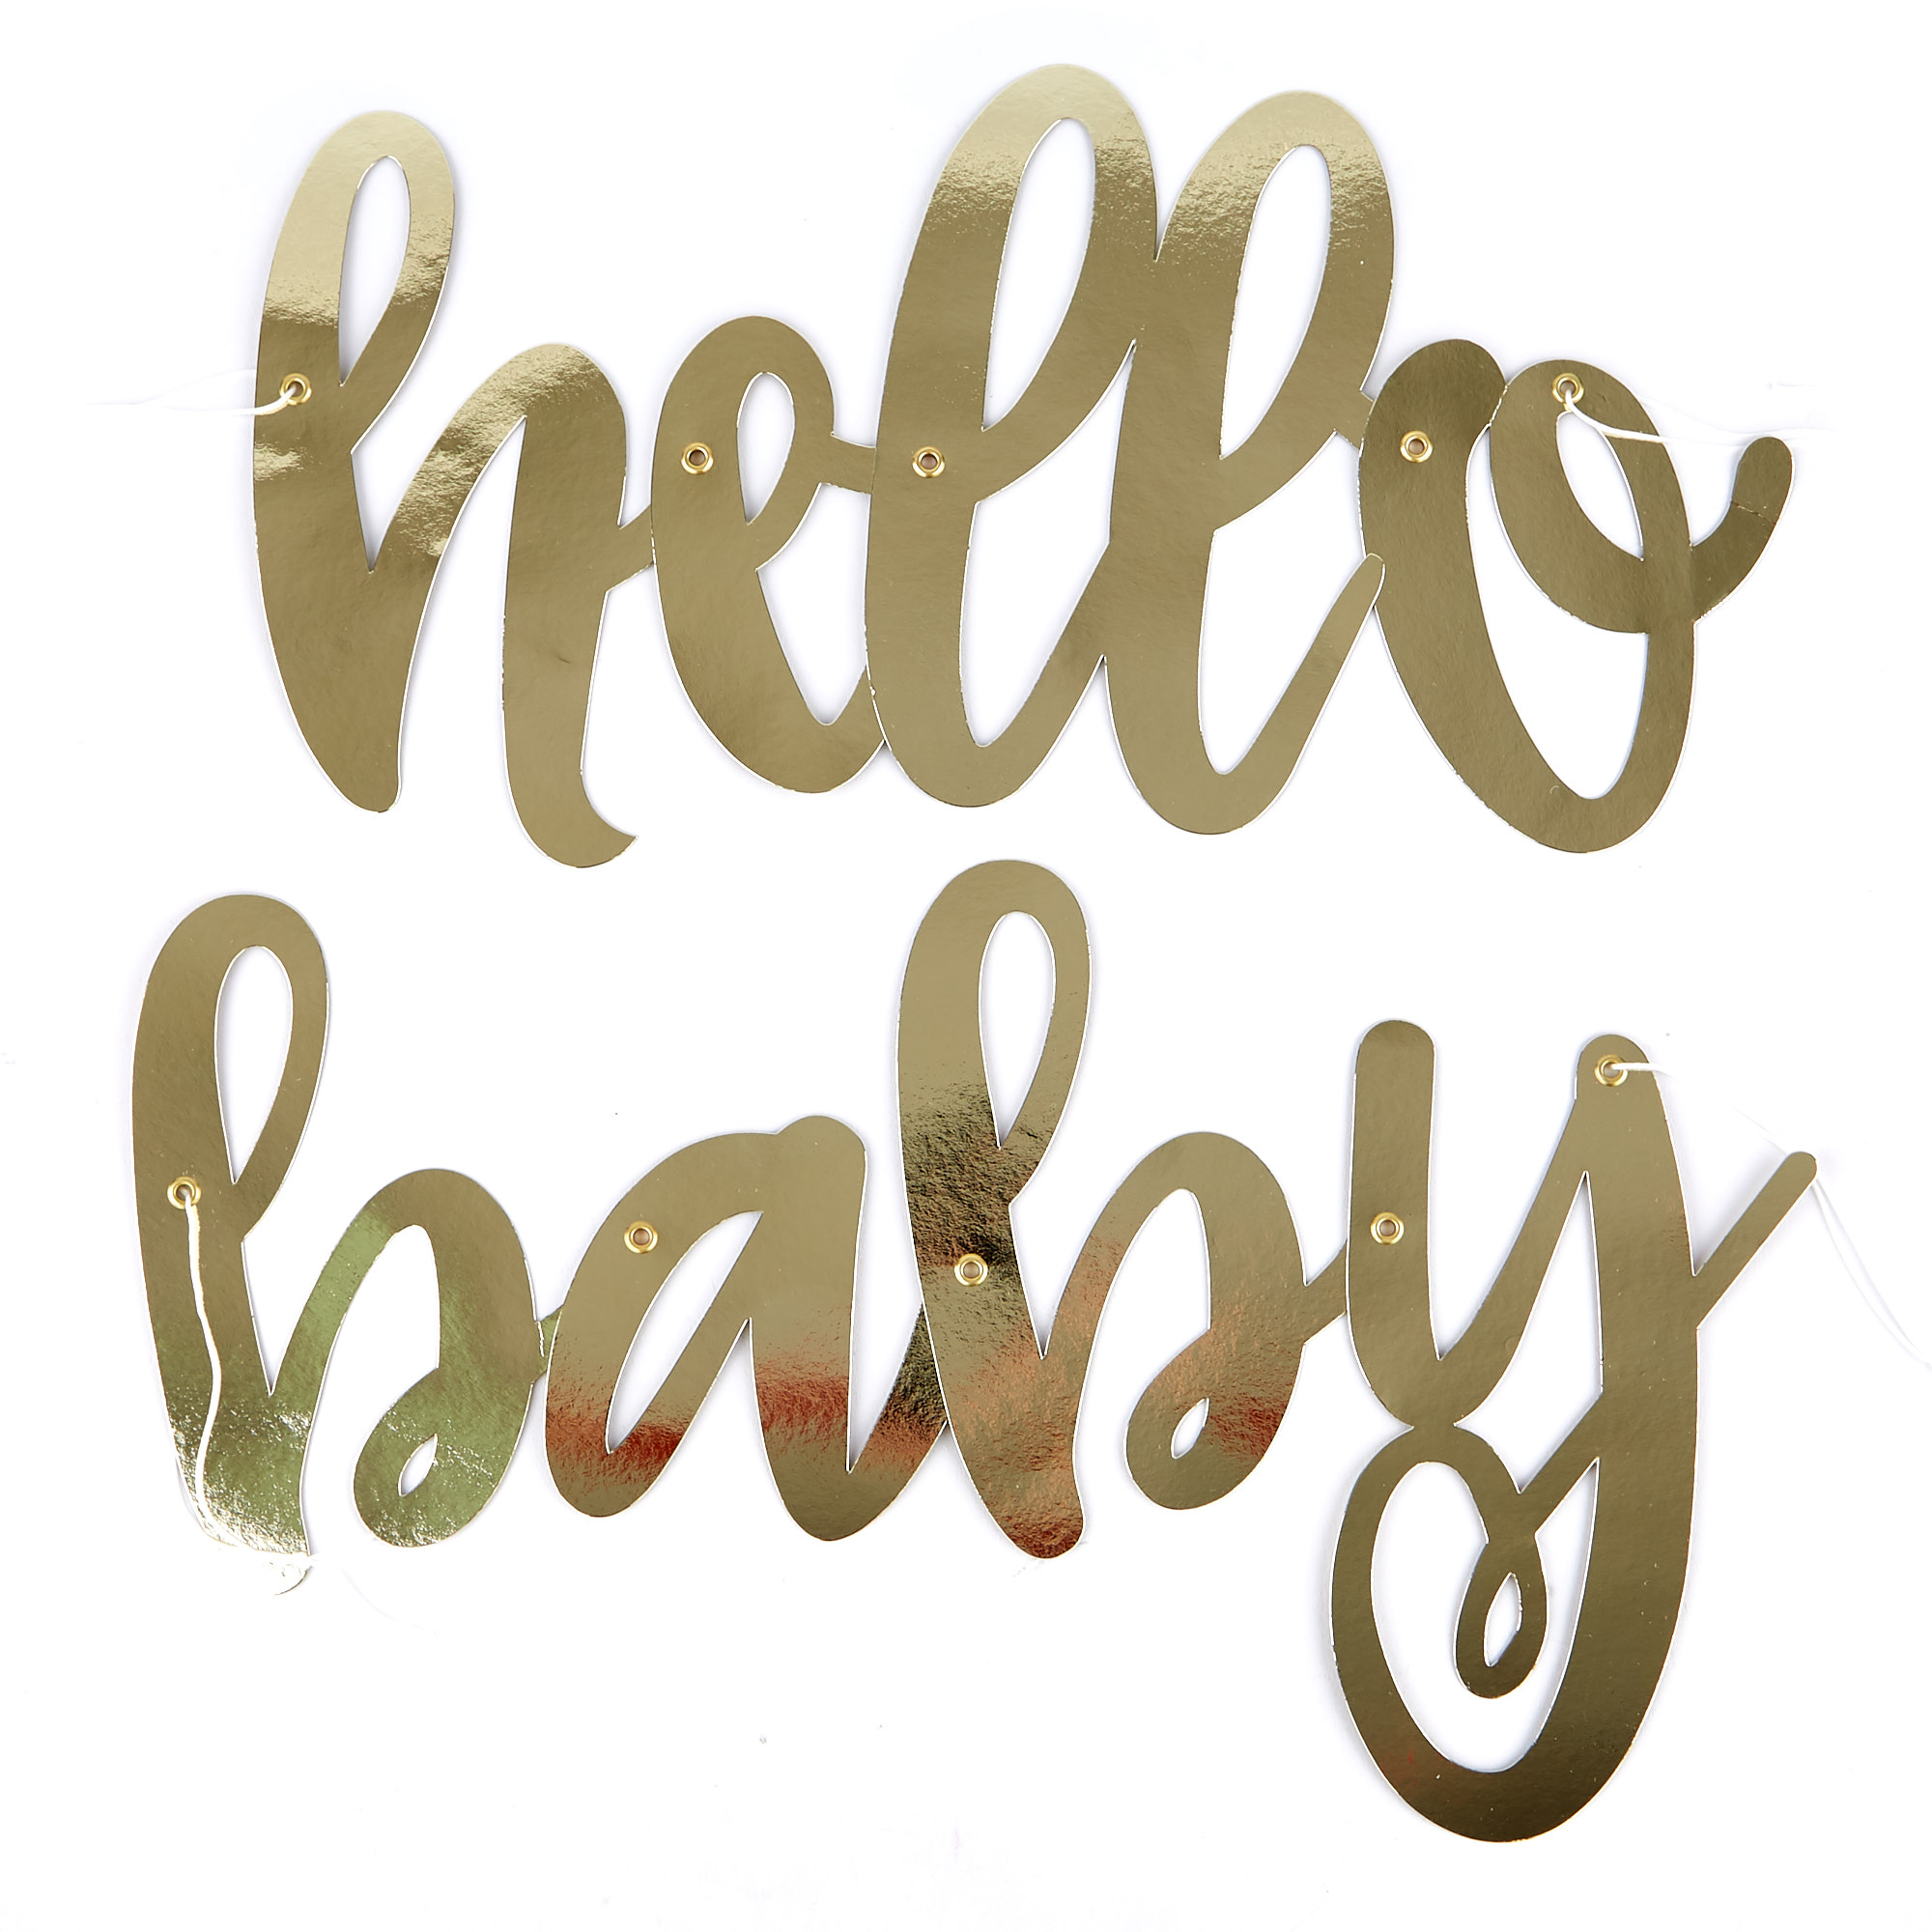 Hello Baby Party Tableware & Decoration Bundle - 16 Guests